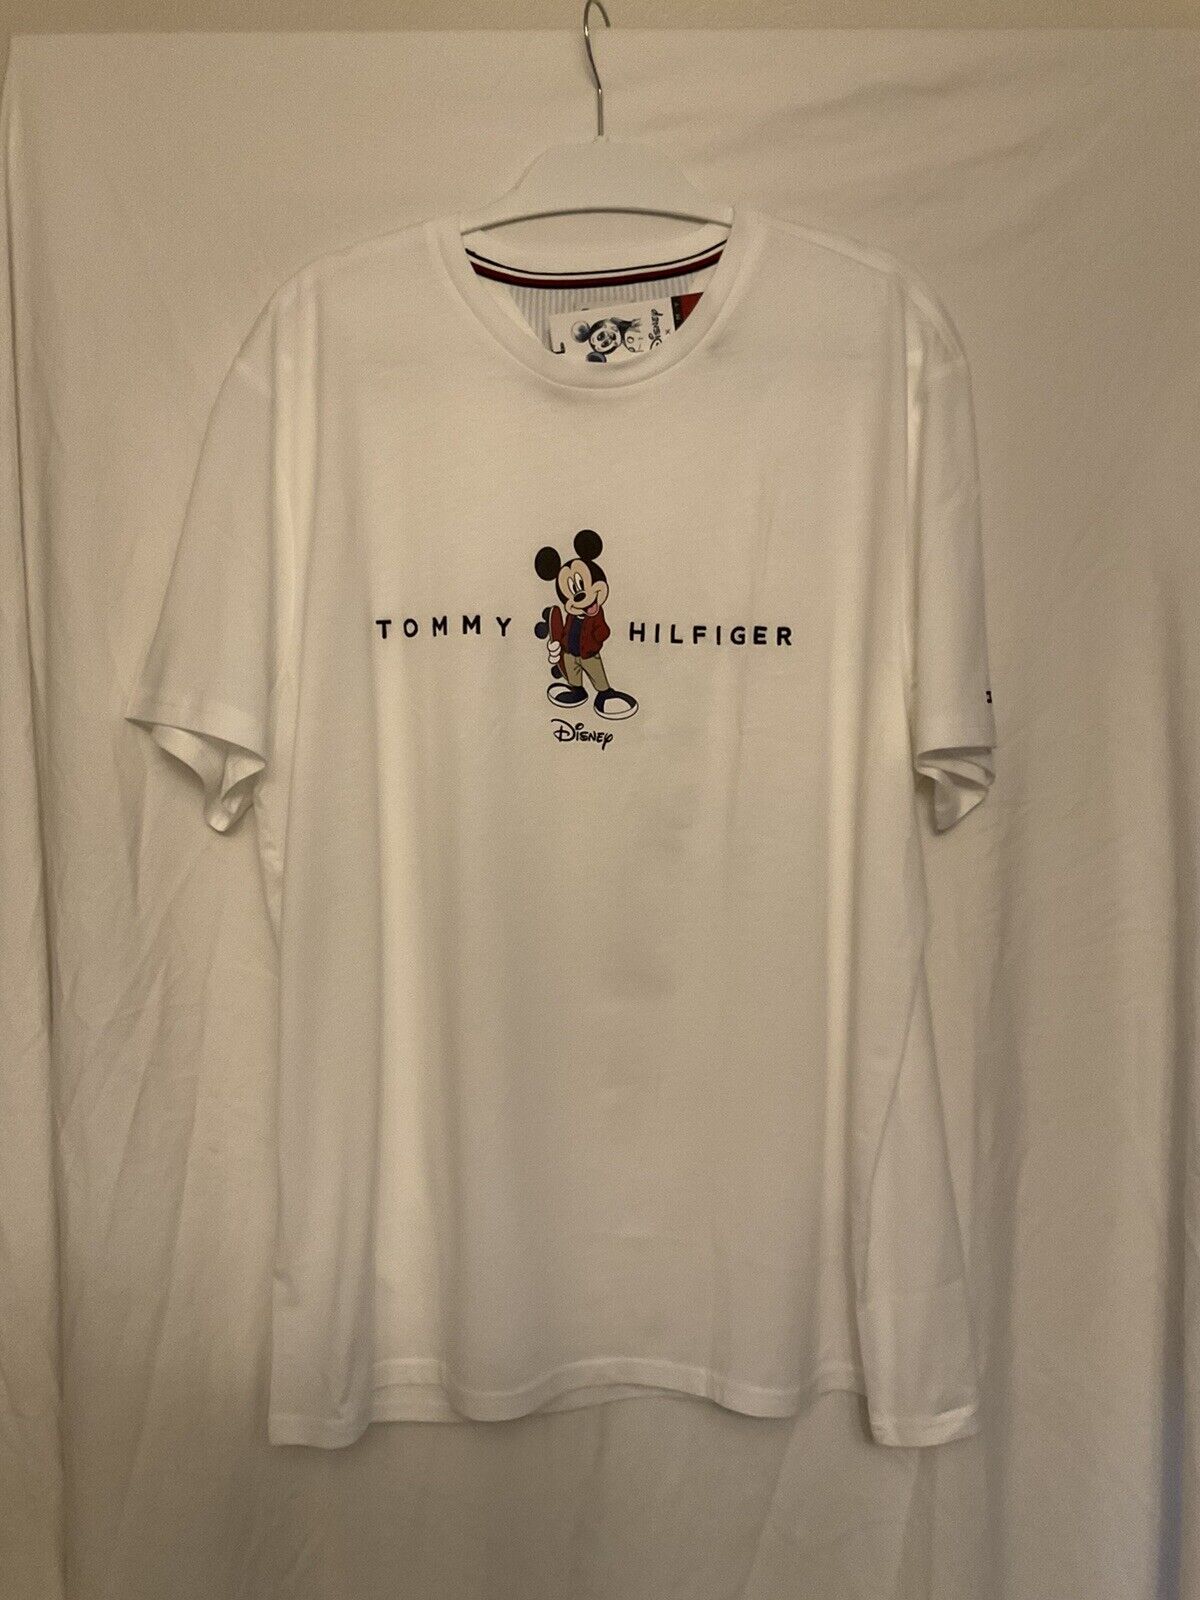 Disneys New Tommy Hilfiger Mickey Mouse T-Shirt Sz Large Premium Cotton Re-$159